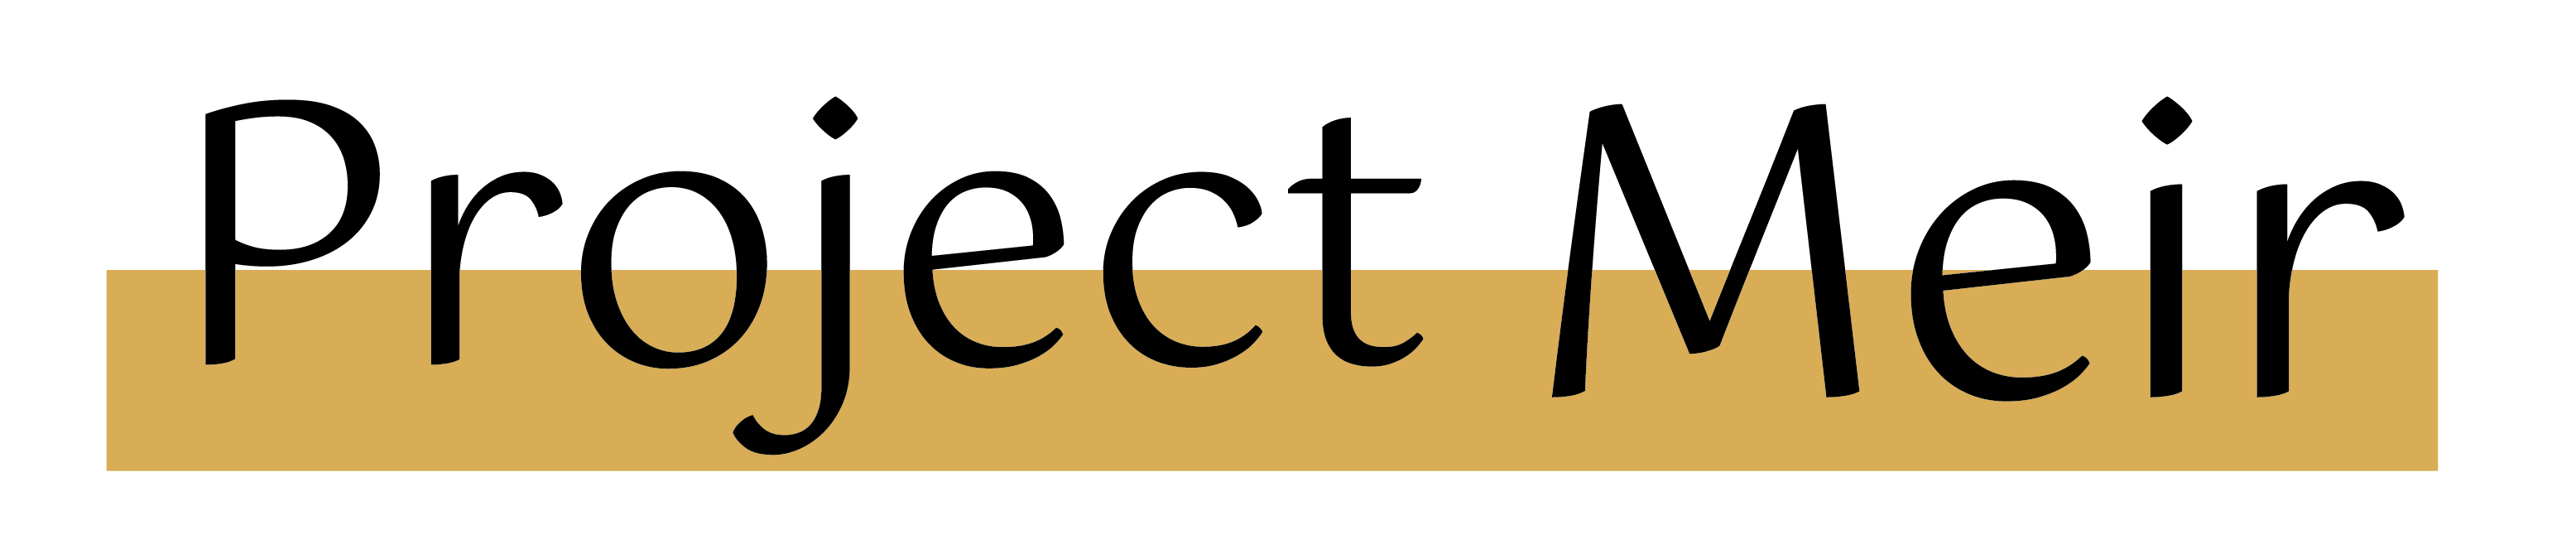 ProjectMeir logo WEB 4